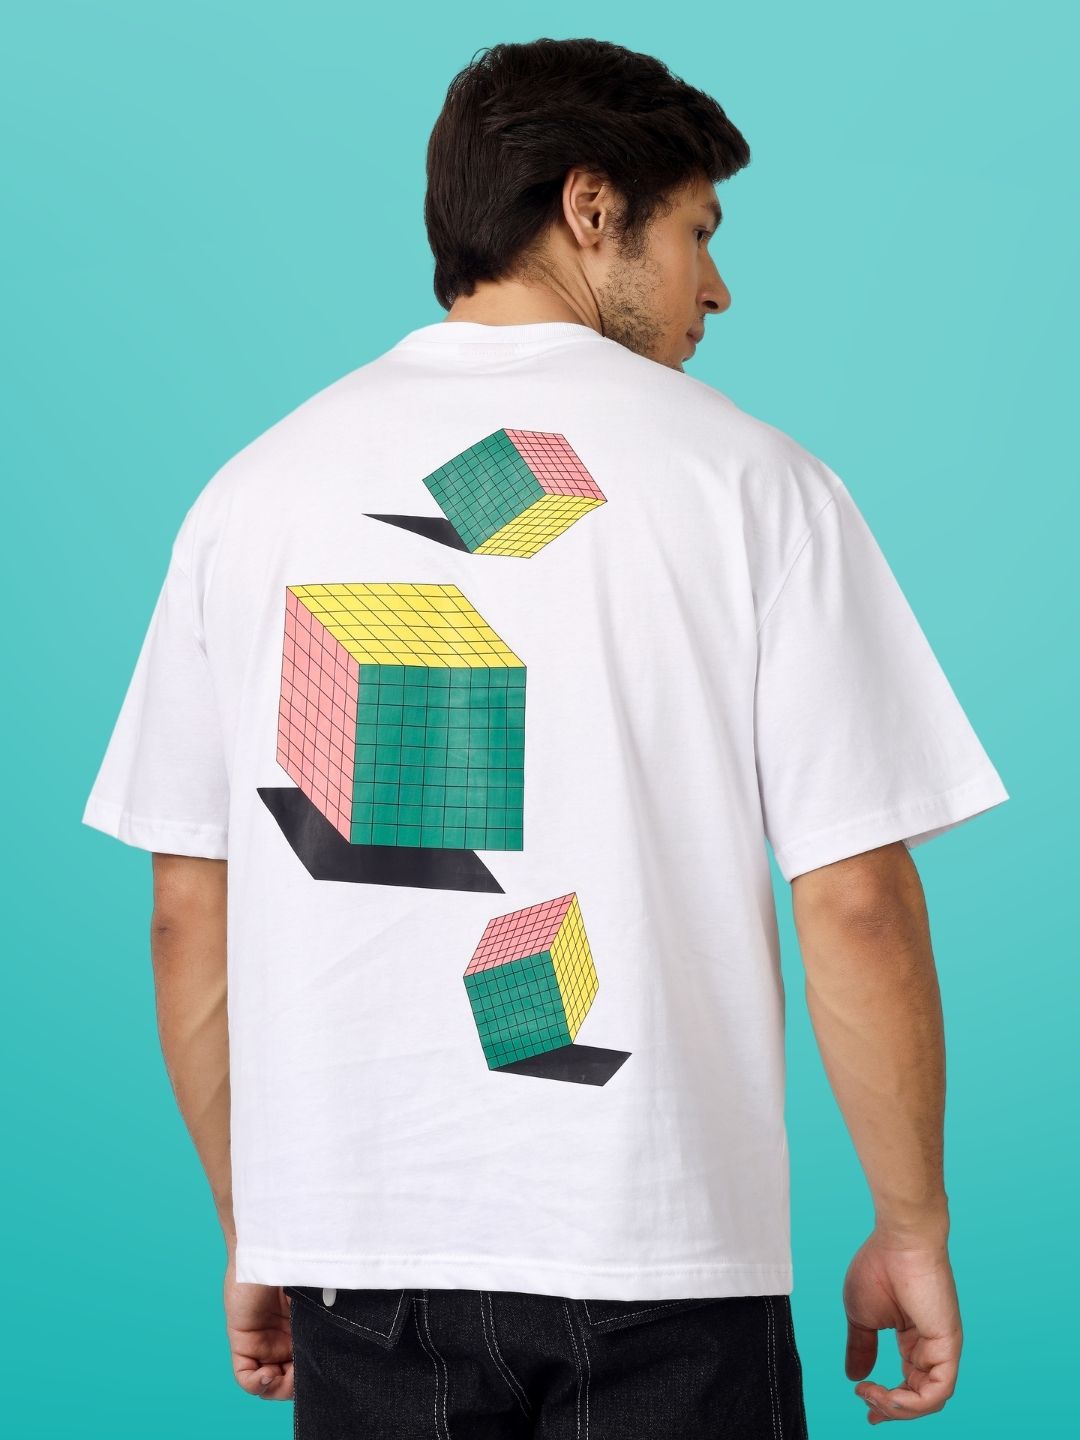 Future Over-Sized T-Shirt (White) - Wearduds